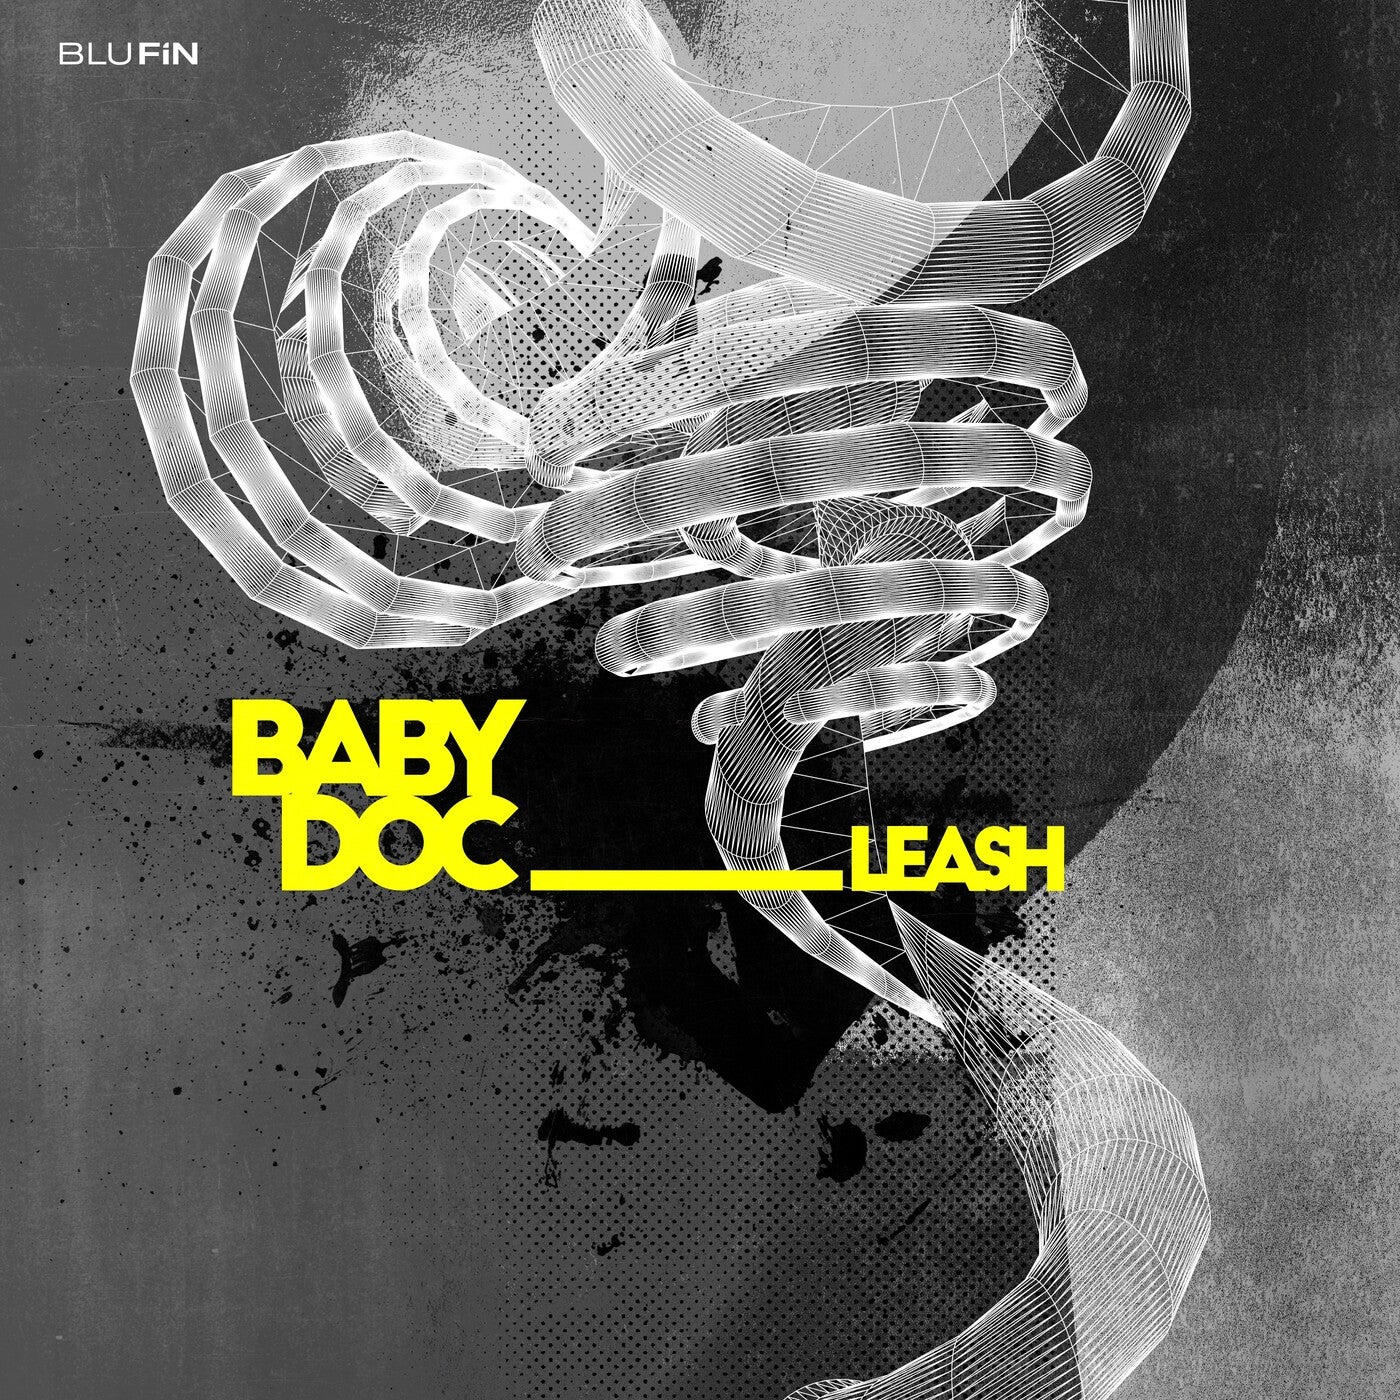 Baby Doc – Leash [BF326]